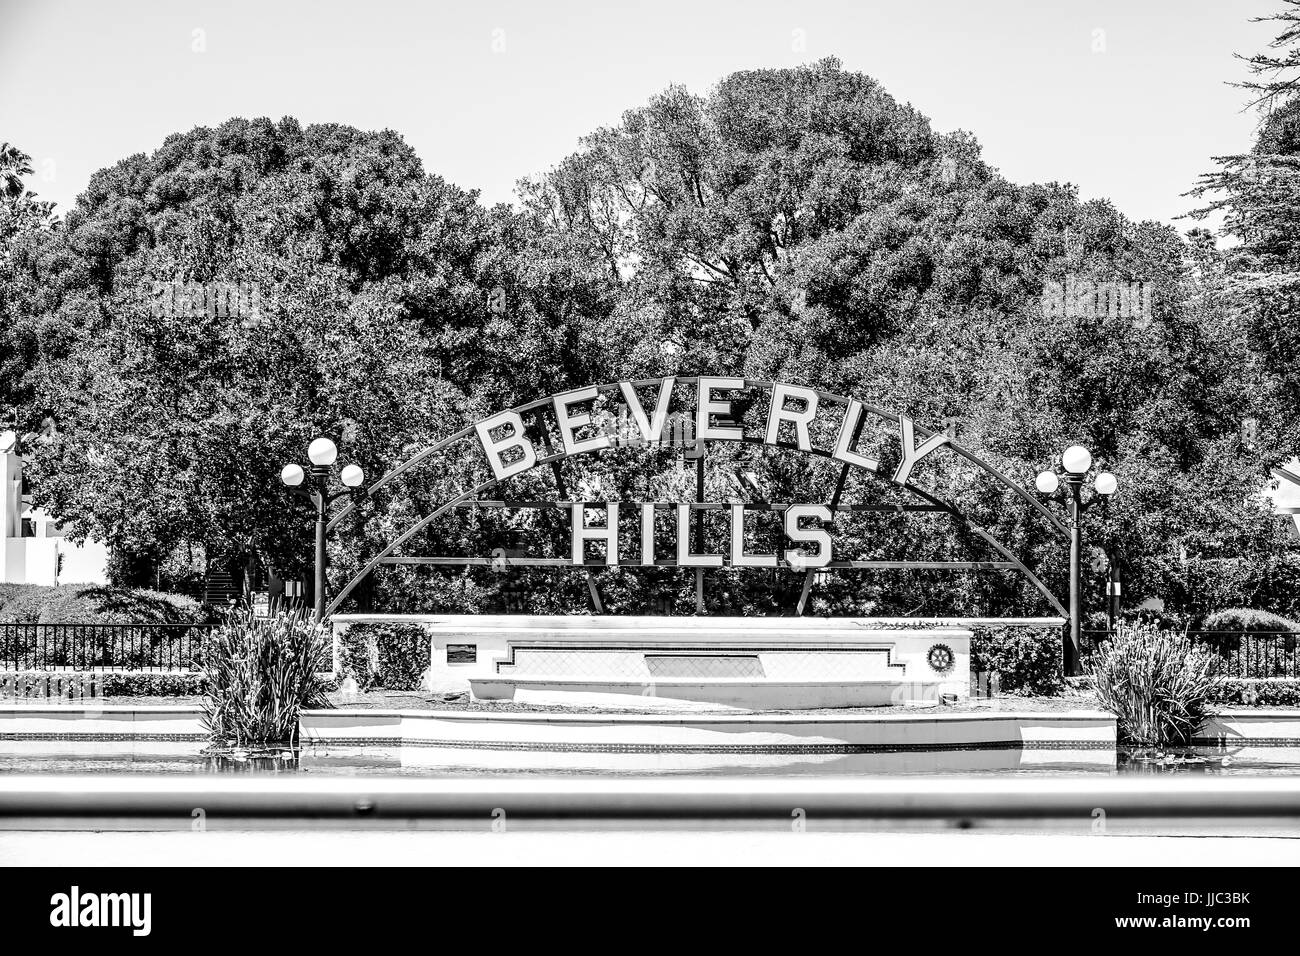 Beverly Hills sign at Santa Monica Blvd - LOS ANGELES - CALIFORNIA - APRIL 20, 2017 Stock Photo